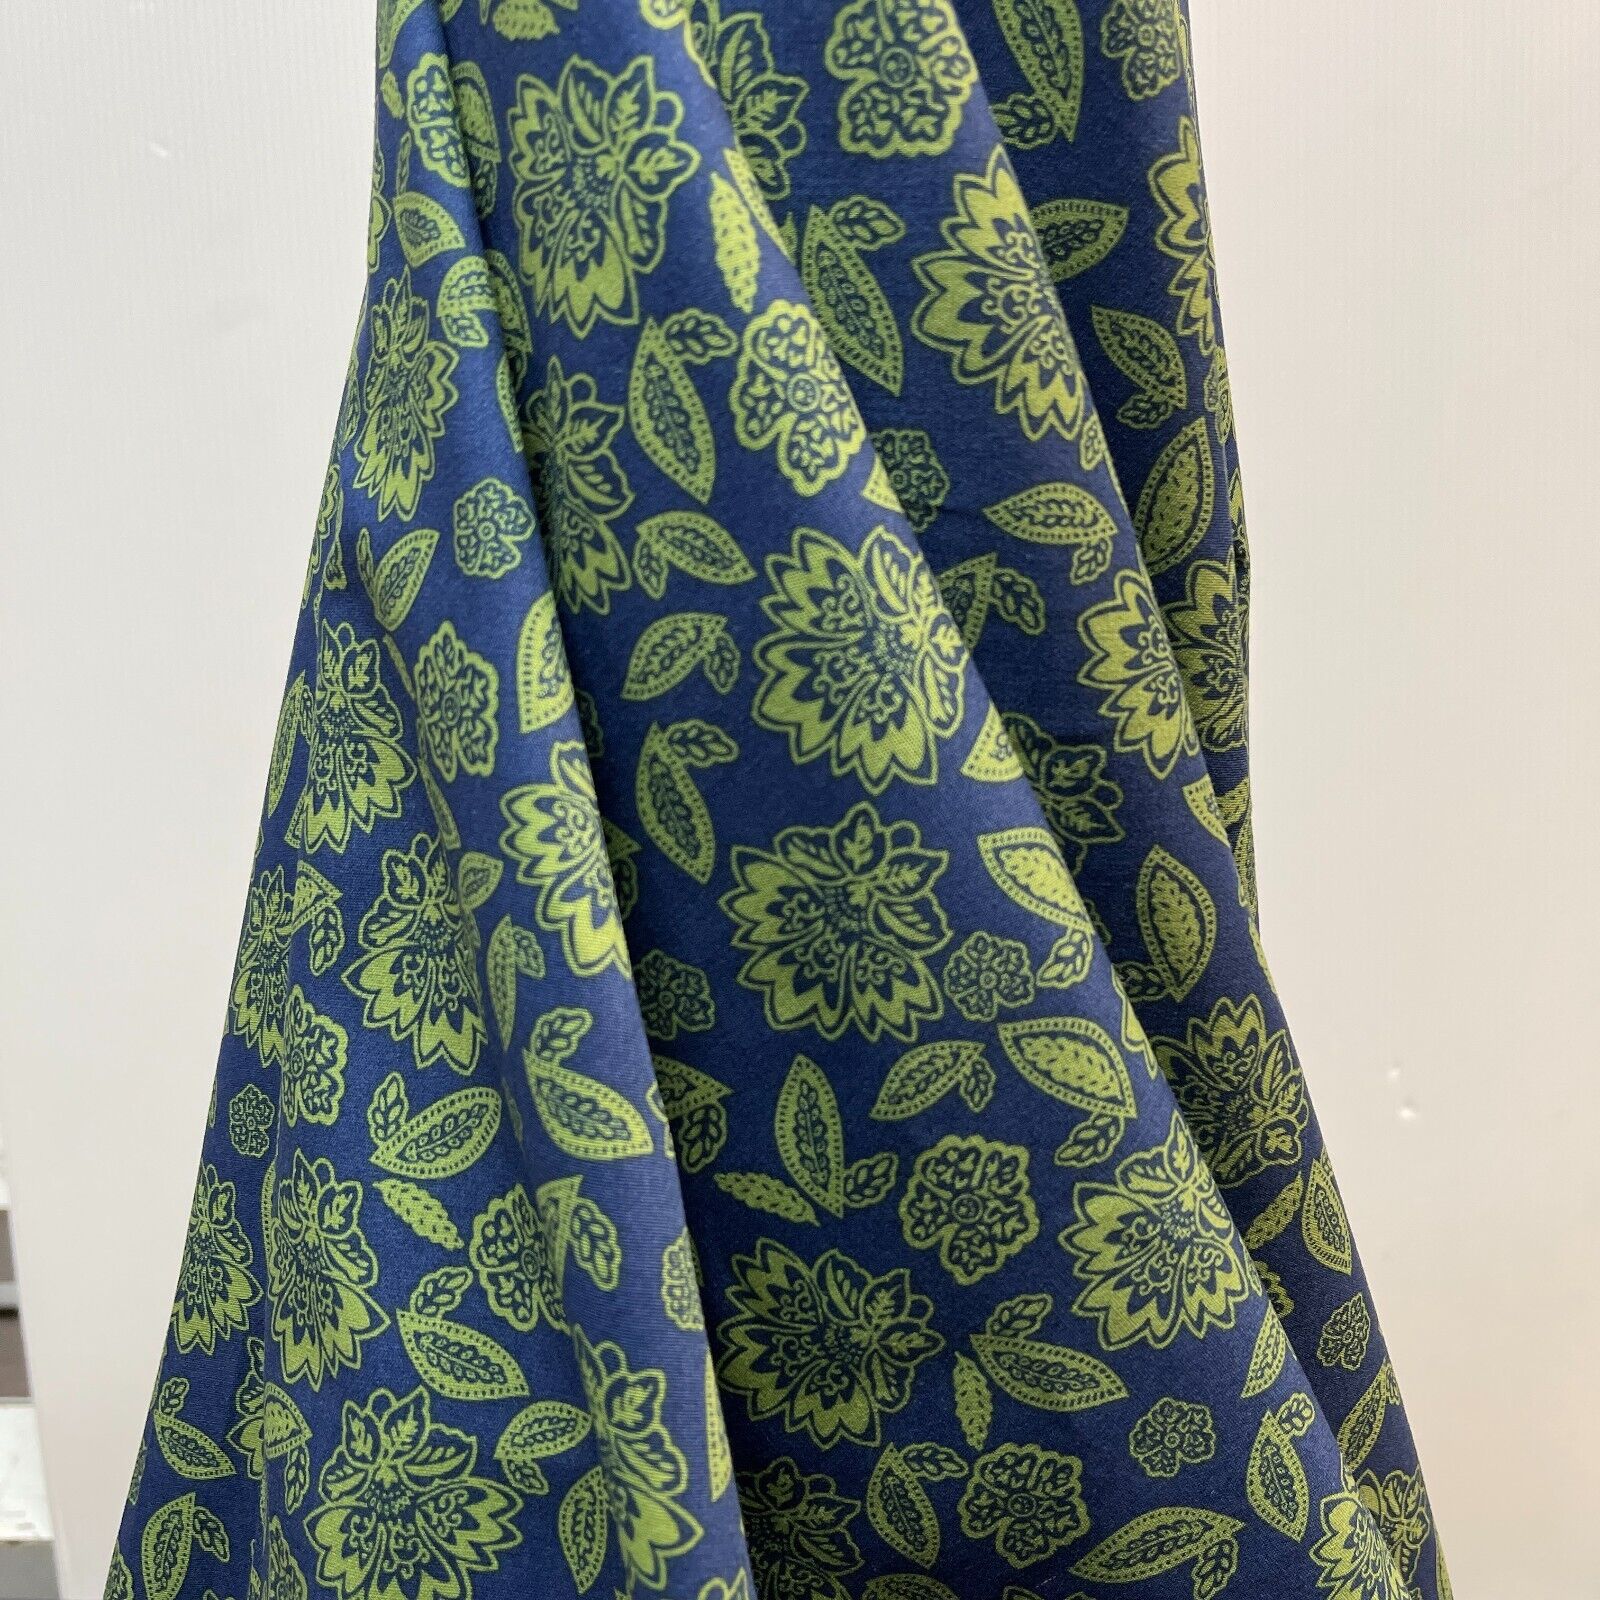 Vintage Floral 100% cotton printed dress craft fabric 150cm wide M1737